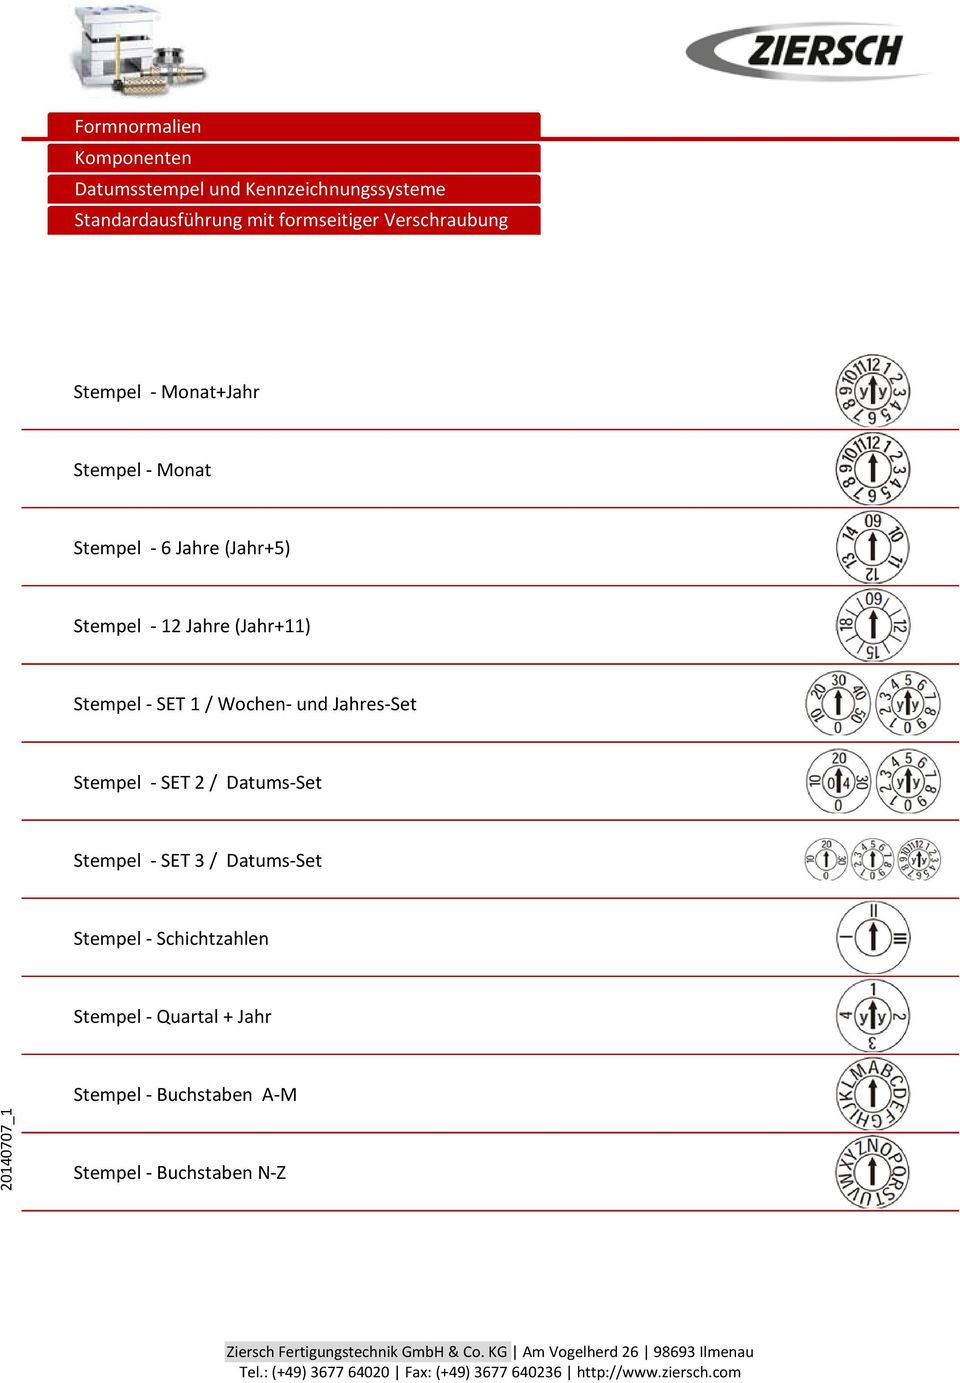 Datums-Set Stempel - SET / Datums-Set Stempel - Schichtzahlen Stempel - Quartal + Jahr 2010707_1